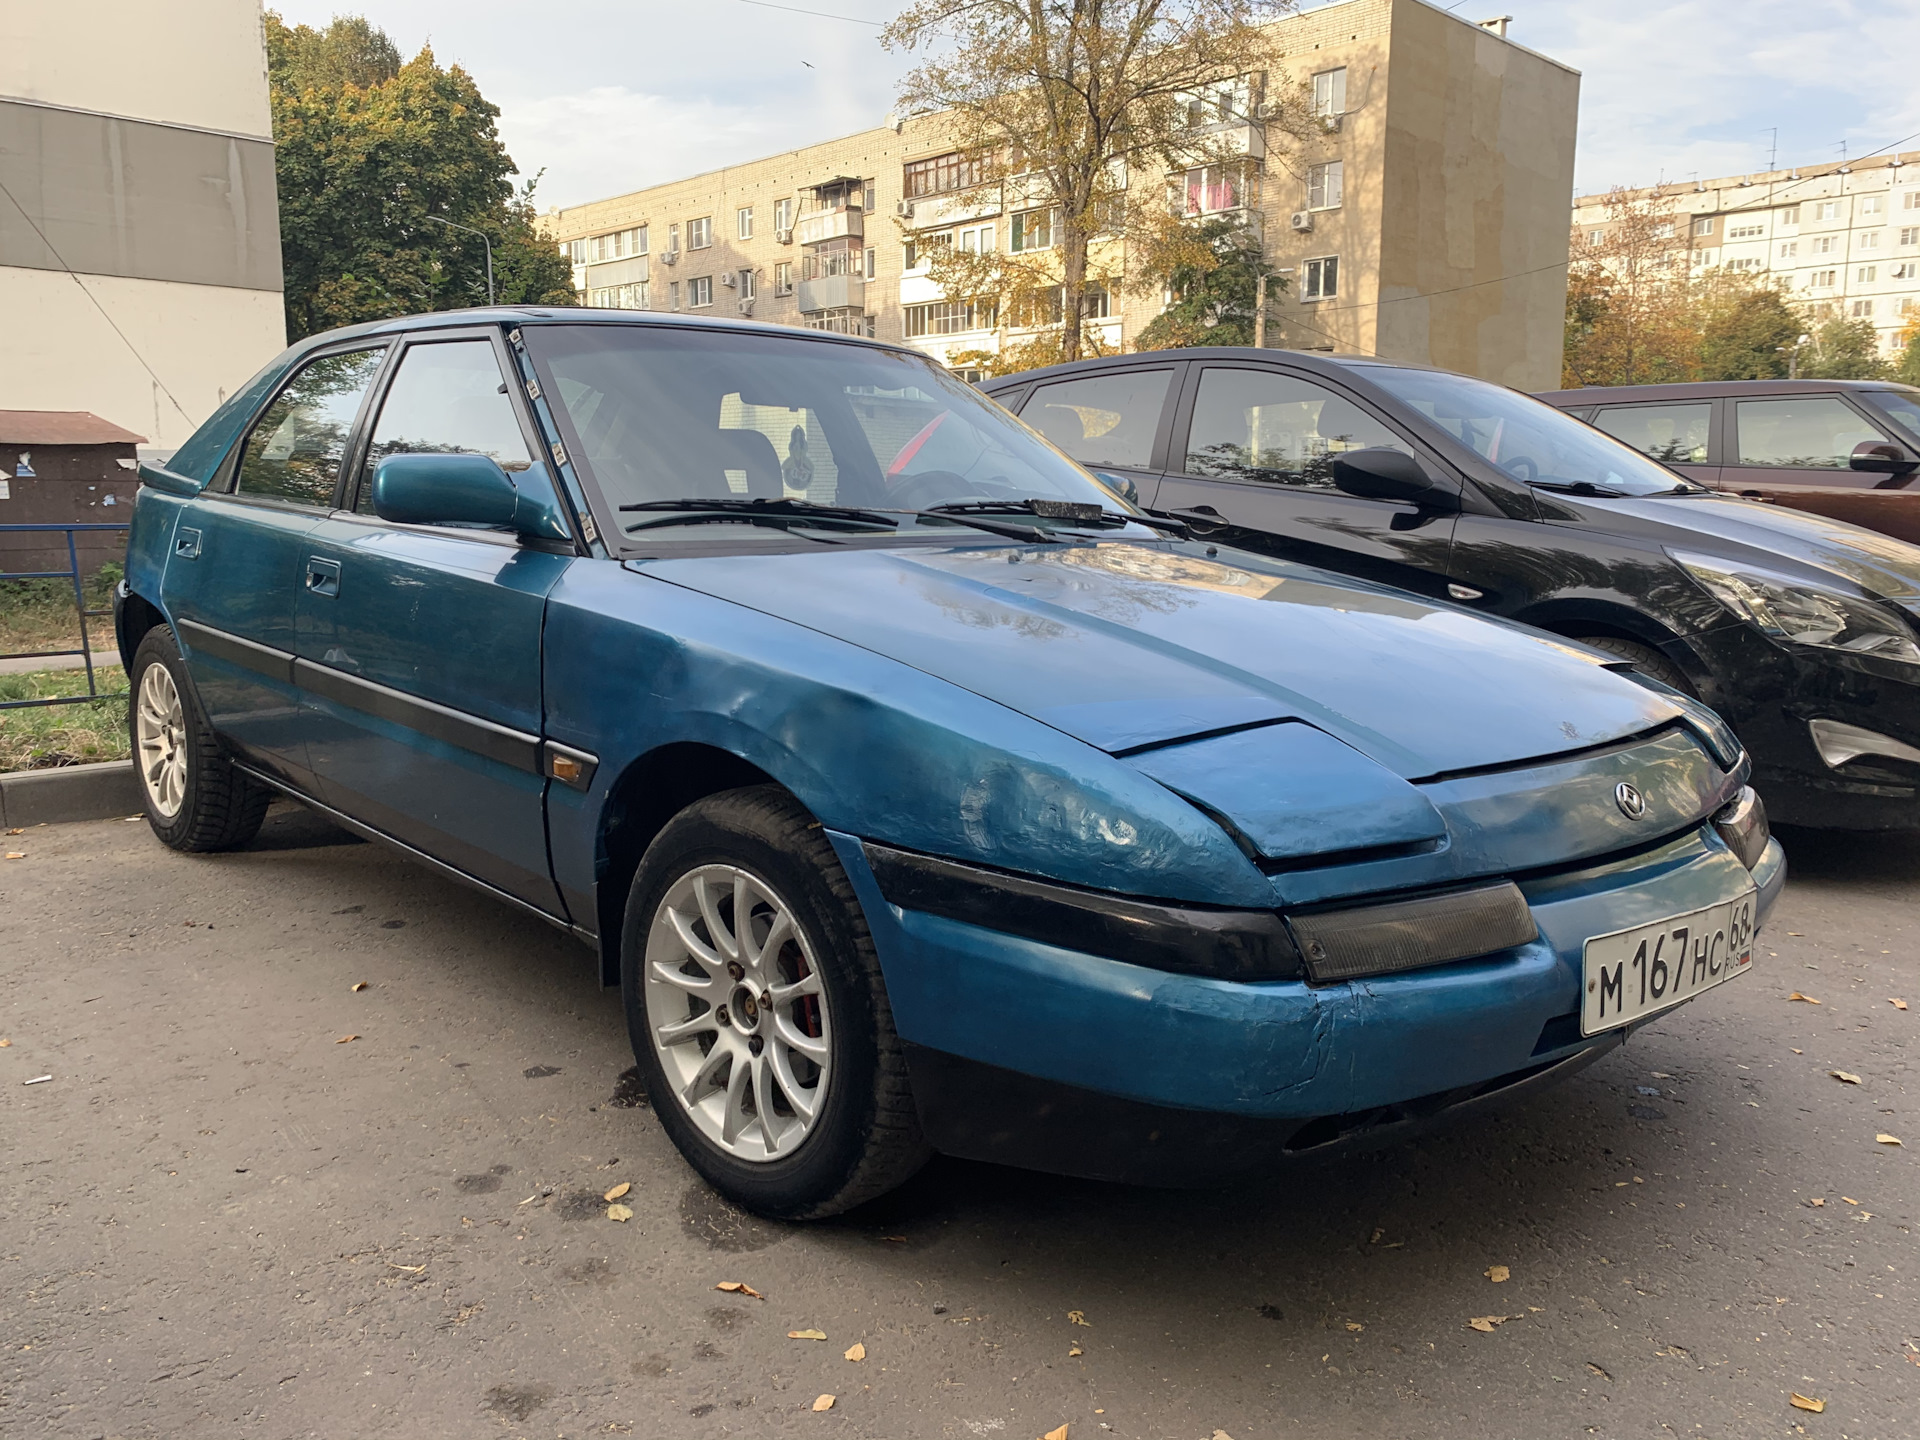 Mazda 1992. Мазда 1992 года. Мазда 323 2002г 1.6 бирюзового цвета. 1992 Цвет.